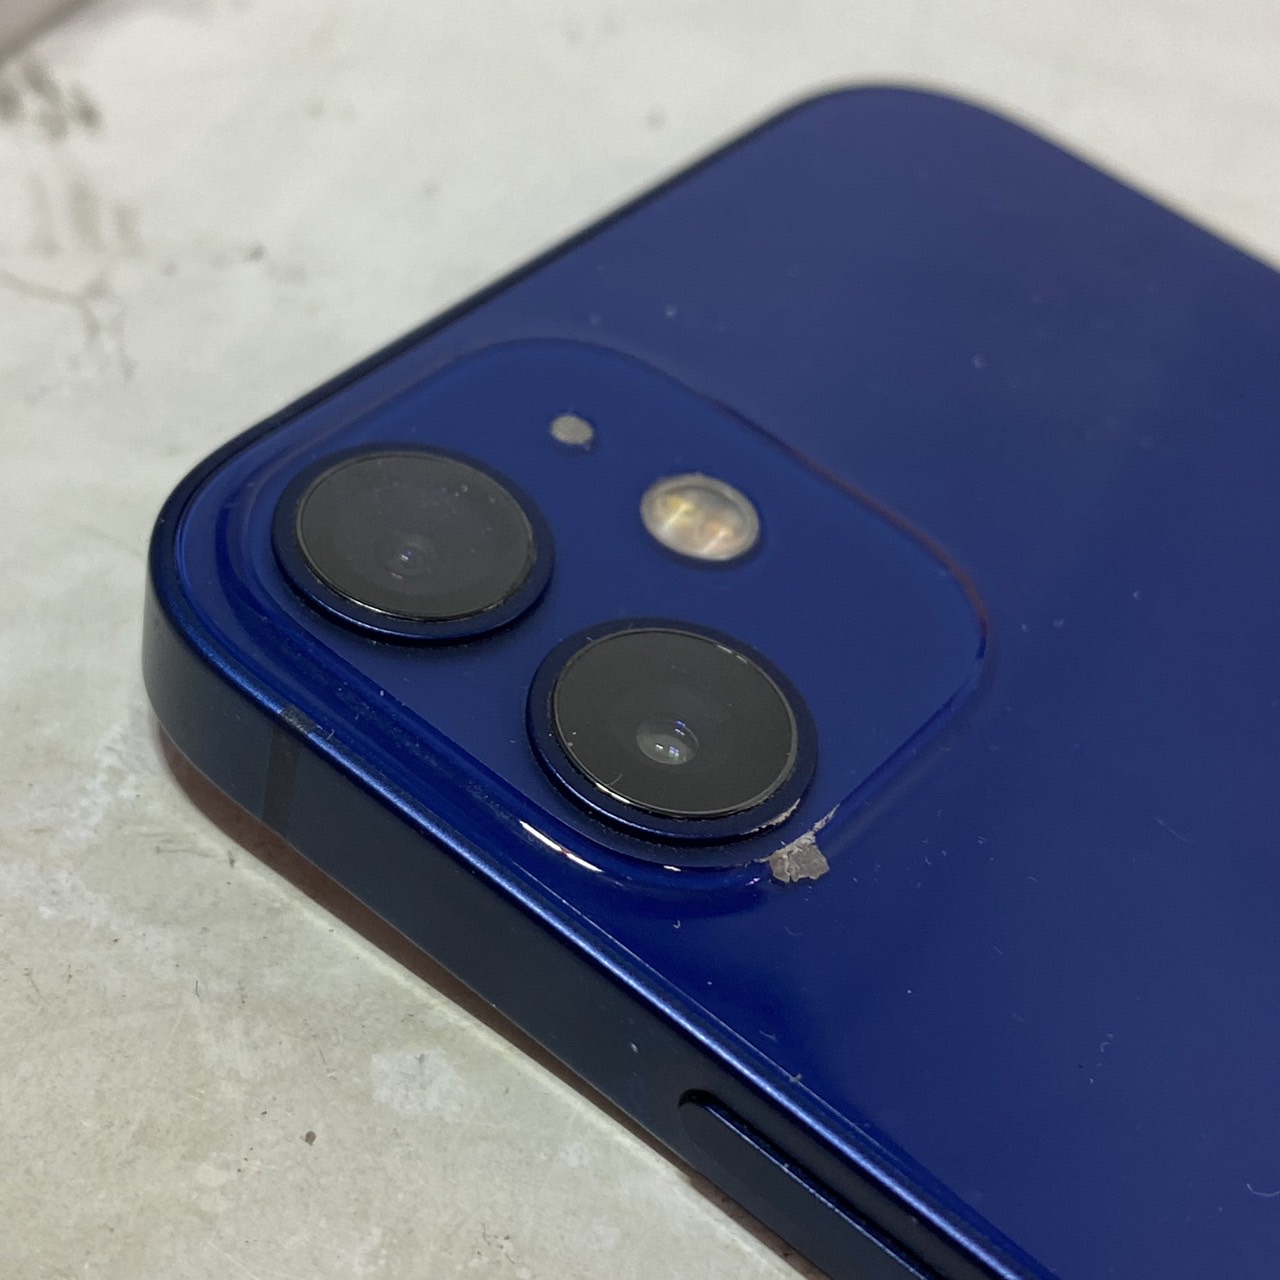 APPLE(アップル) iPhone 12 mini 128GB SIMフリー [ブルー]